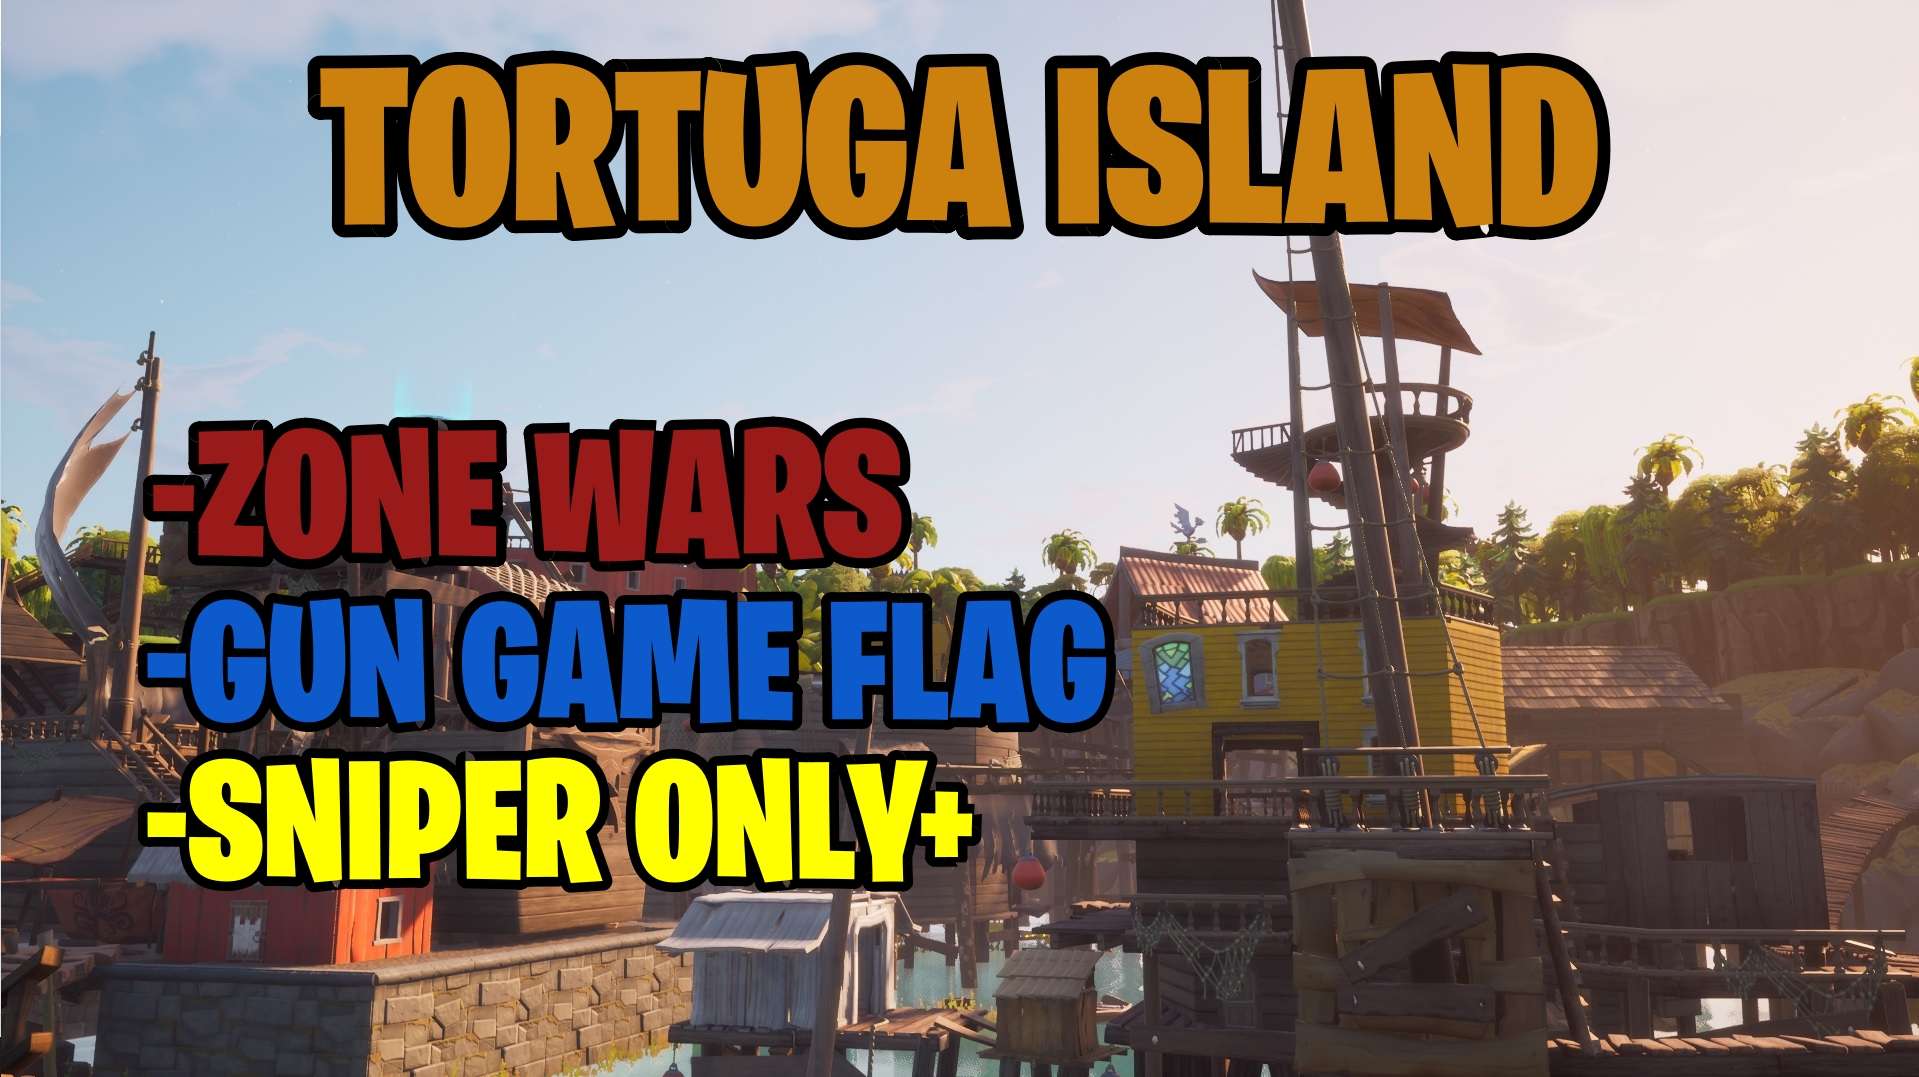 TORTUGA ISLAND - 3 GAME MODES